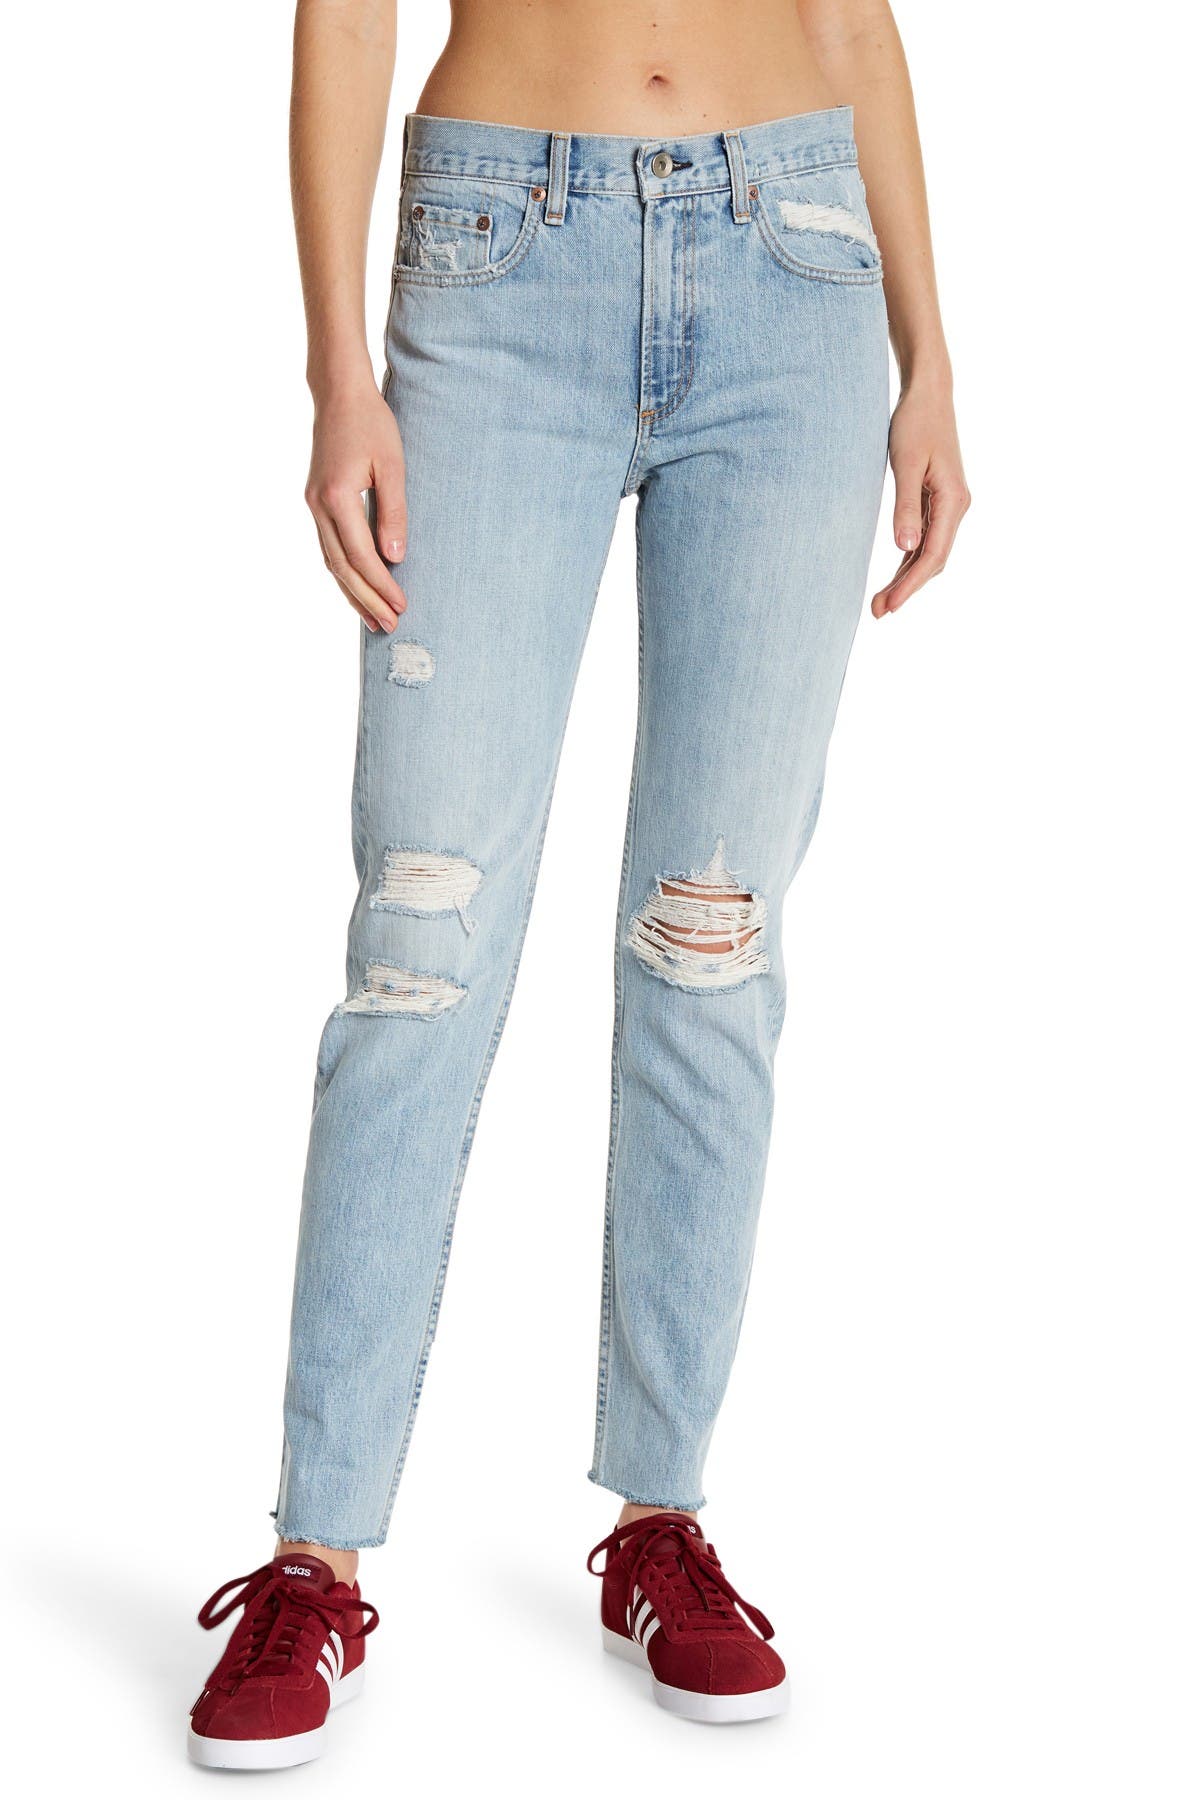 rag and bone marilyn jeans